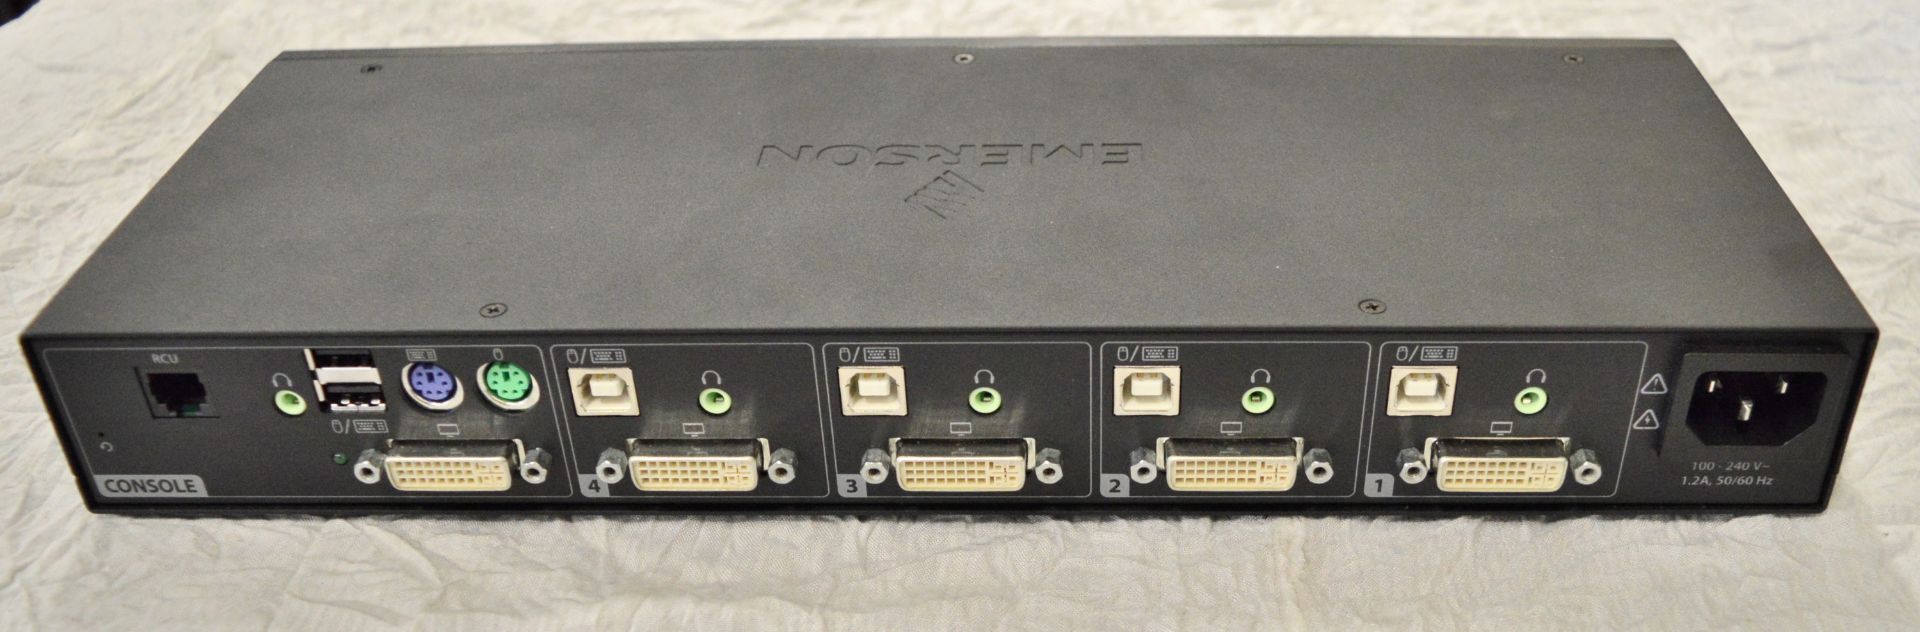 Emerson 4-Port DVI-I Secure KVM Switch SC840. - Image 3 of 3